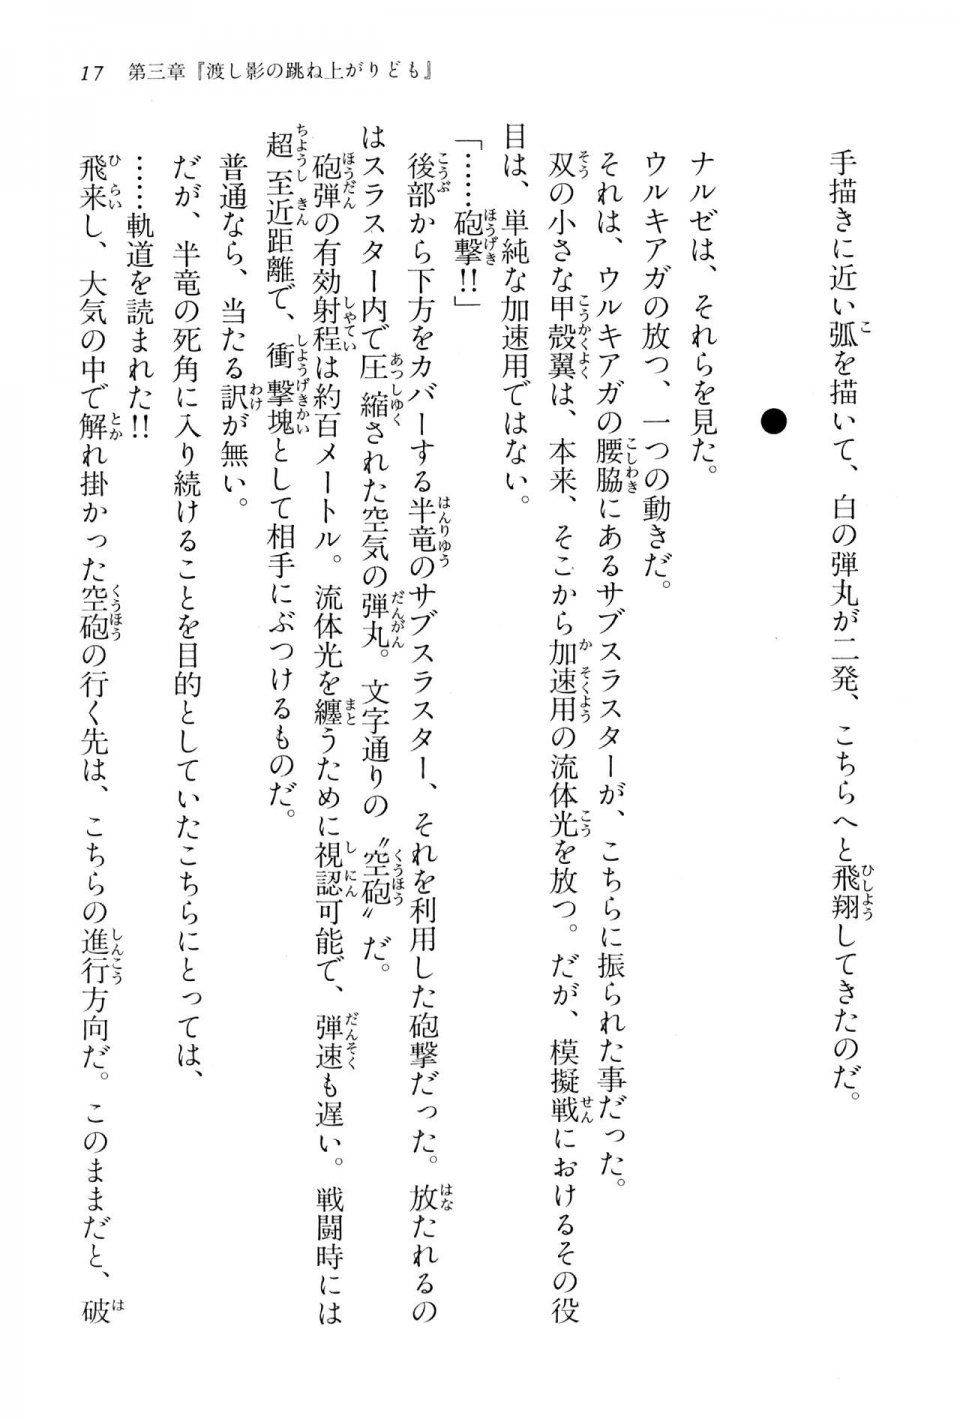 Kyoukai Senjou no Horizon BD Special Mininovel Vol 2(1B) - Photo #21